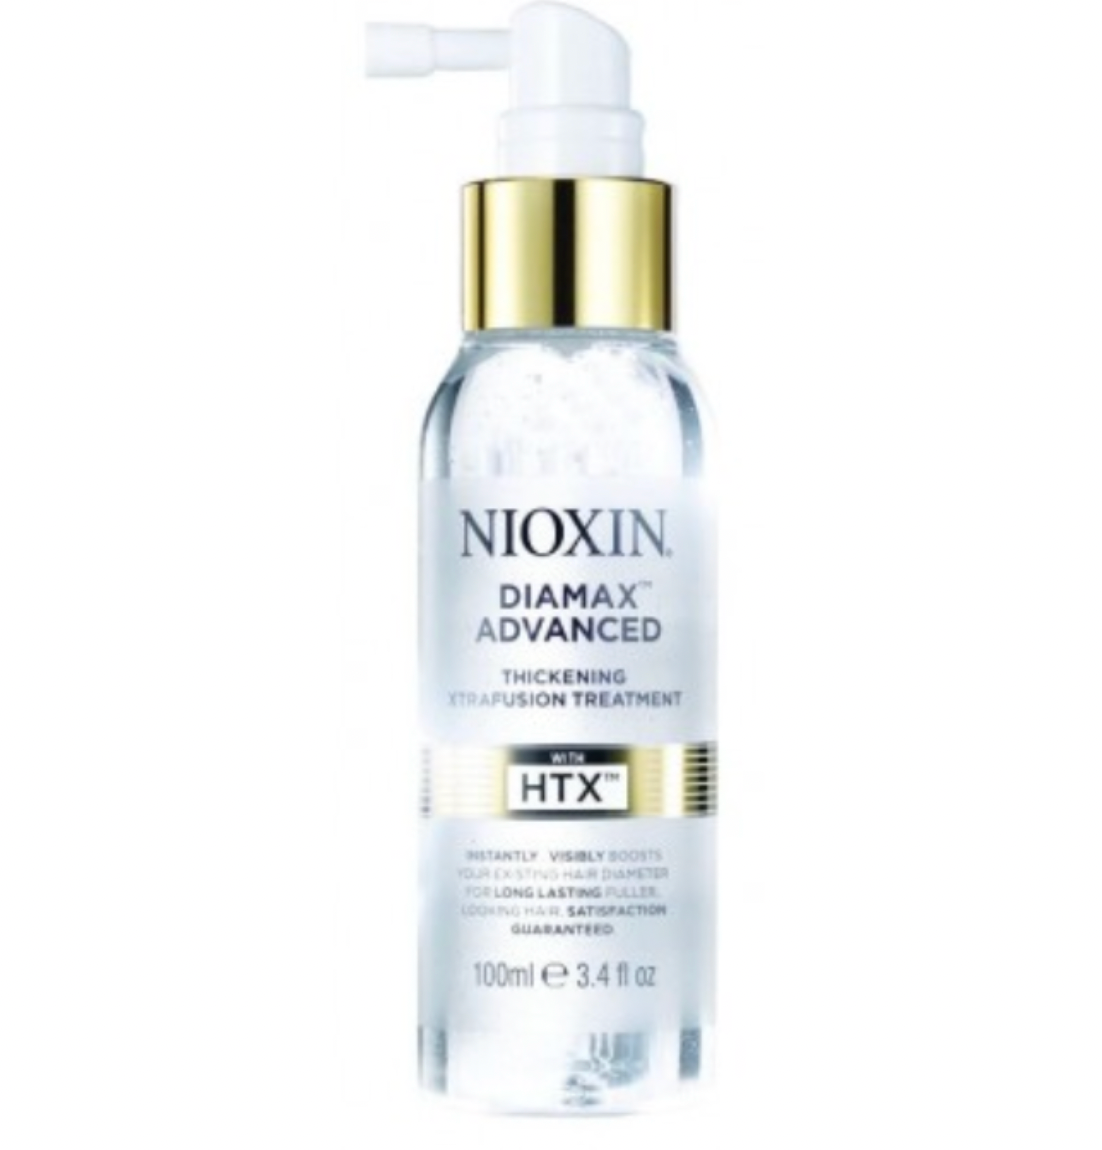 6. Nioxin Diamax Advanced